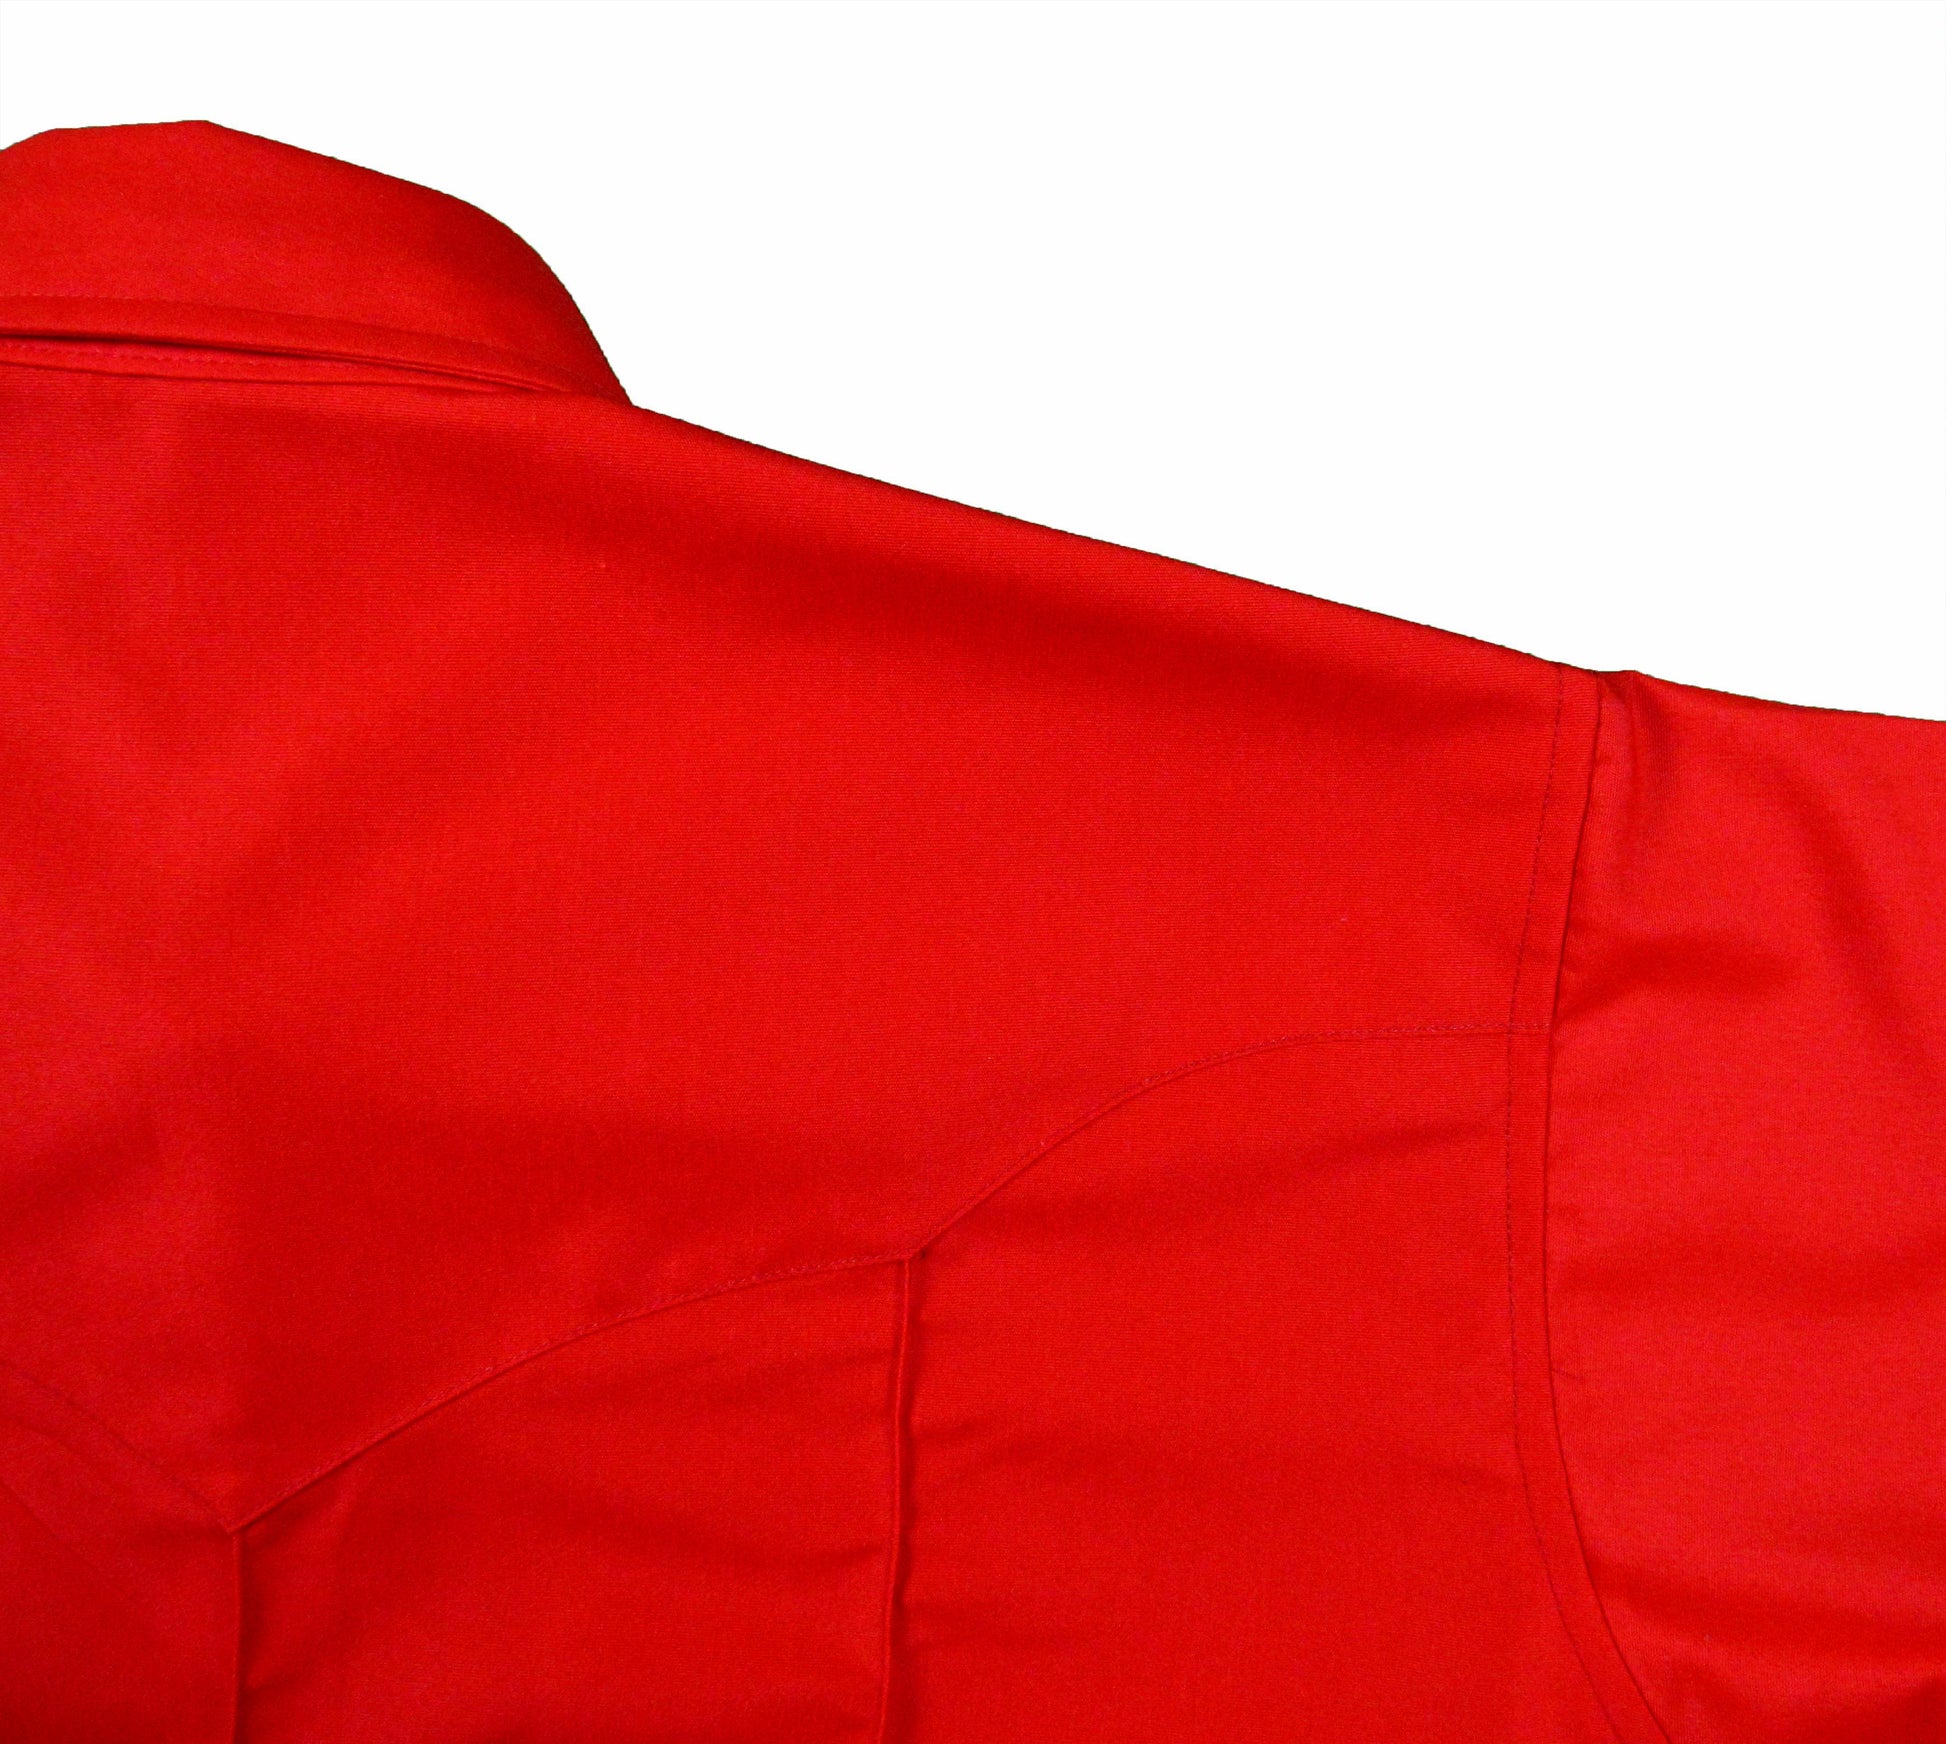 Solid Red Rancher Crease Shirt Made in USA Ruddock Shirts Big and Tall Flying R Ranchwear